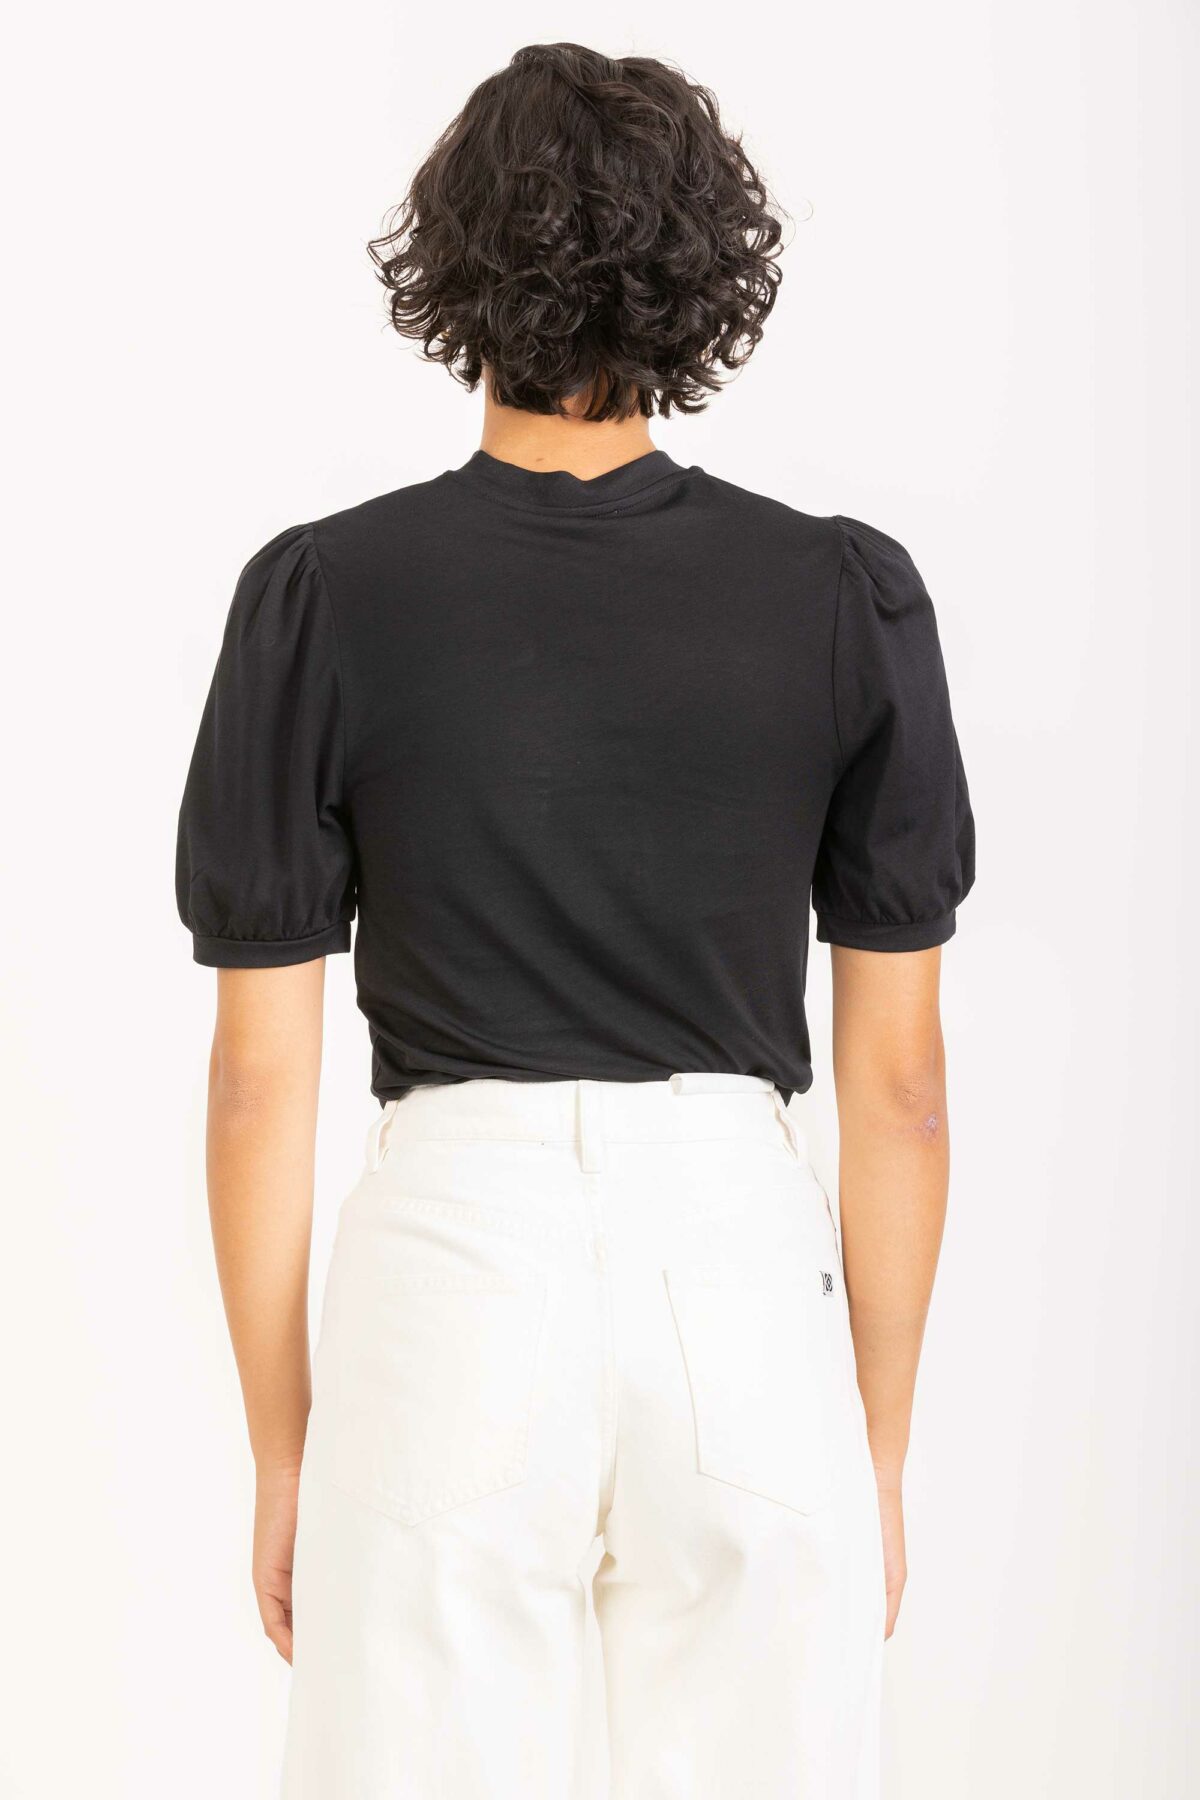 amelando-tshirt-black-balloon-sleeves-sessun-matchboxathens